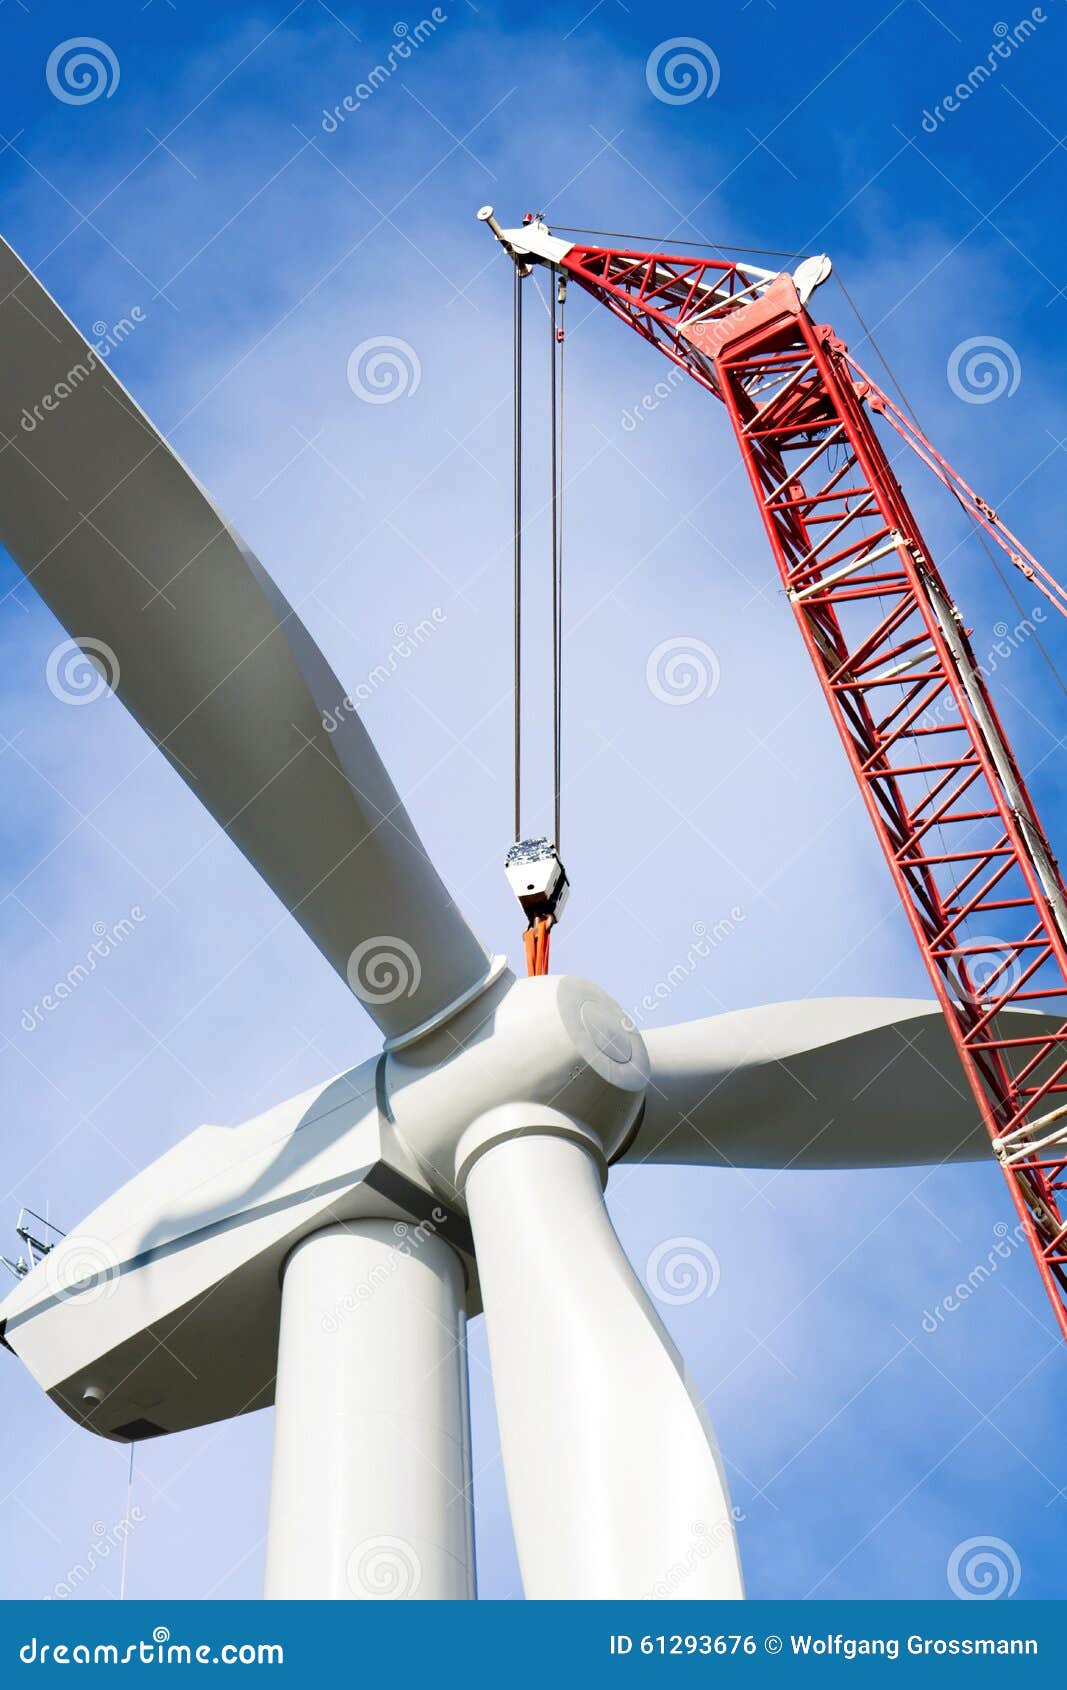 Wind Turbine Construction Stock Photo - Image: 61293676